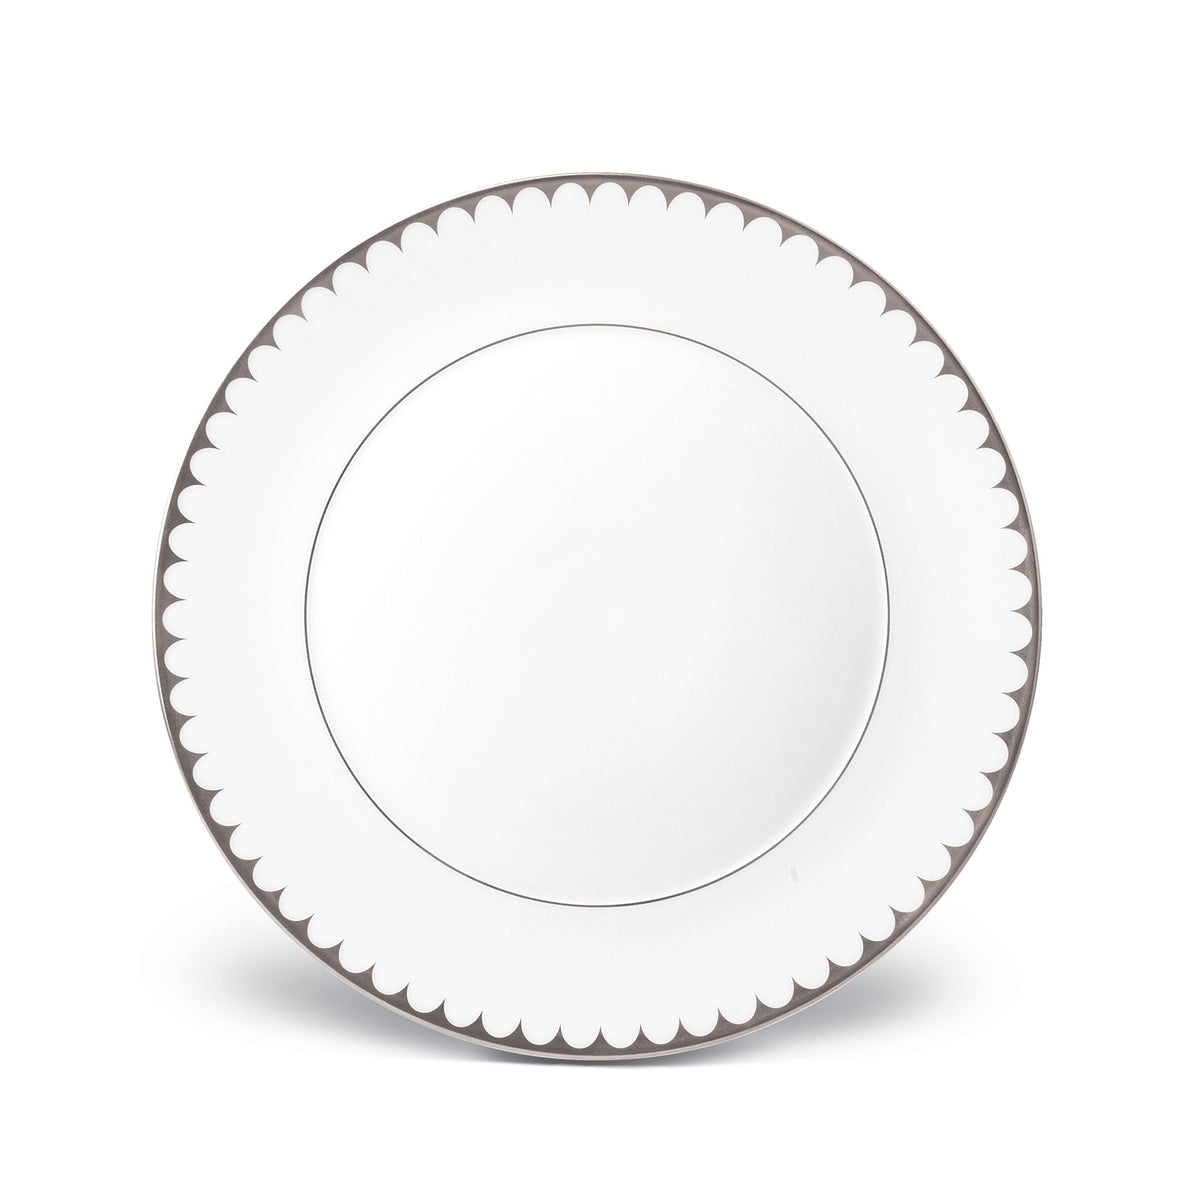 Aegean Filet Dinner Plate - Platinum